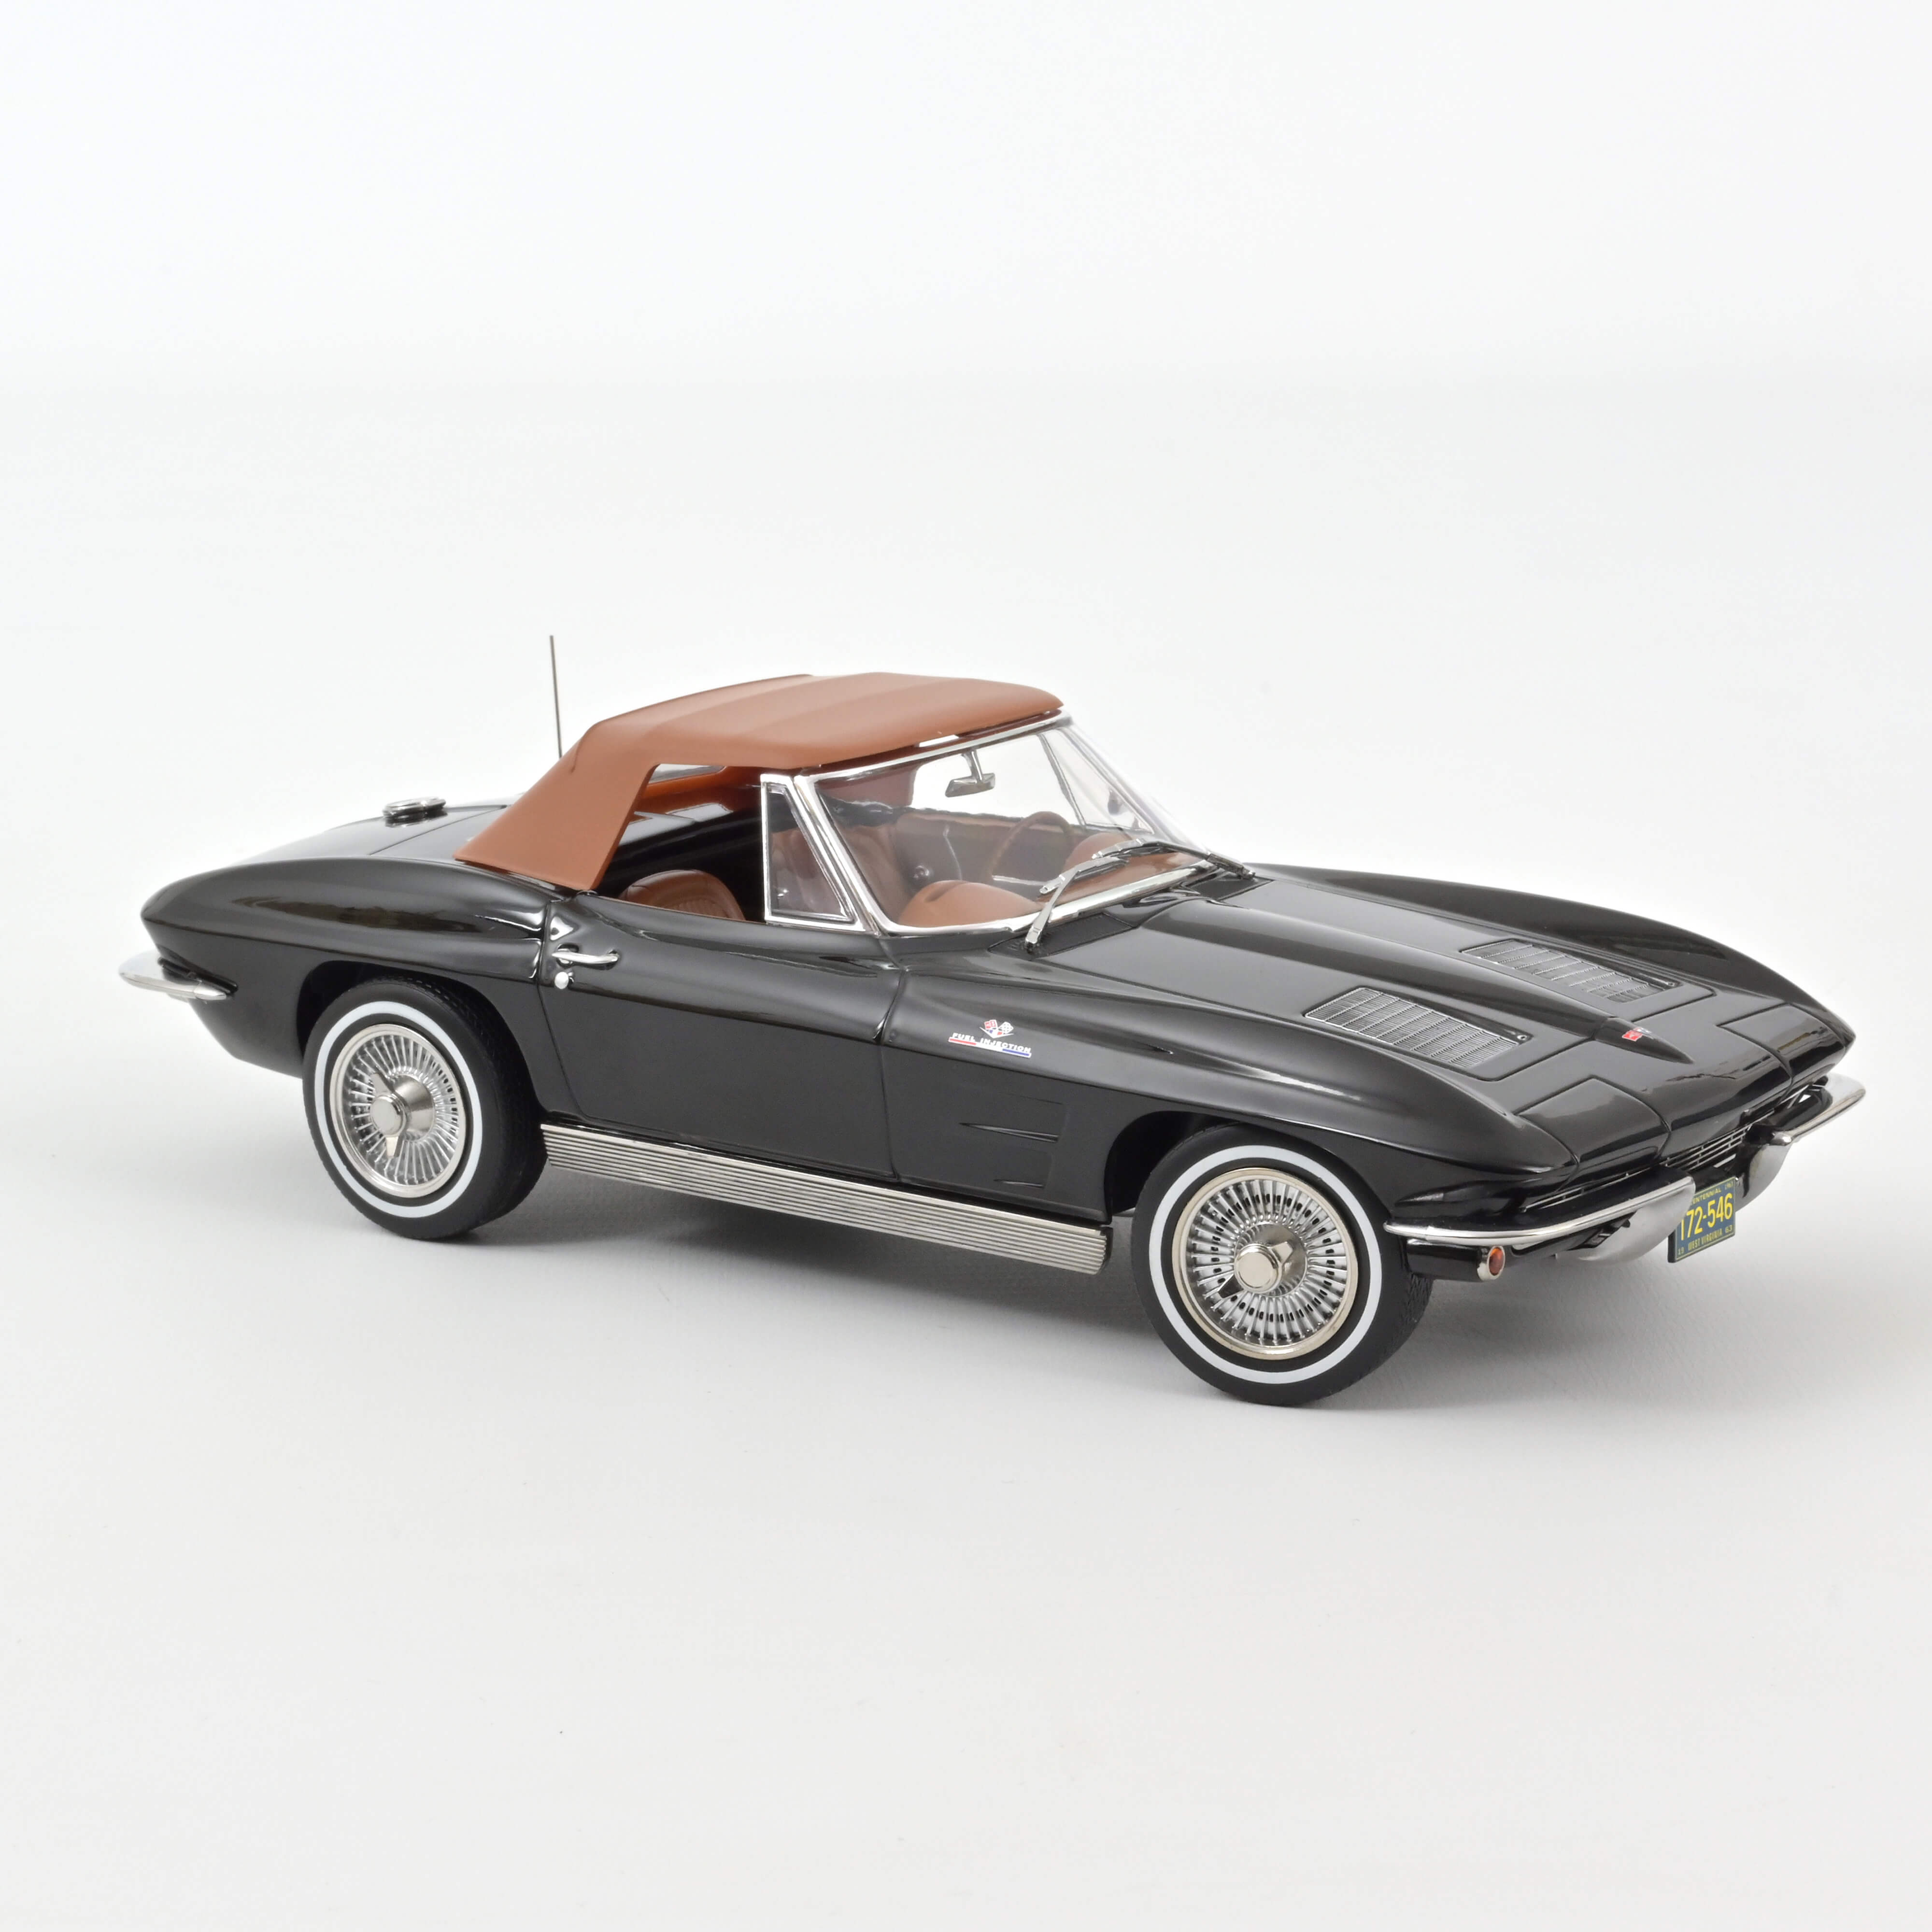 Chevrolet Corvette Sting Ray Cabriolet 1963 – Black